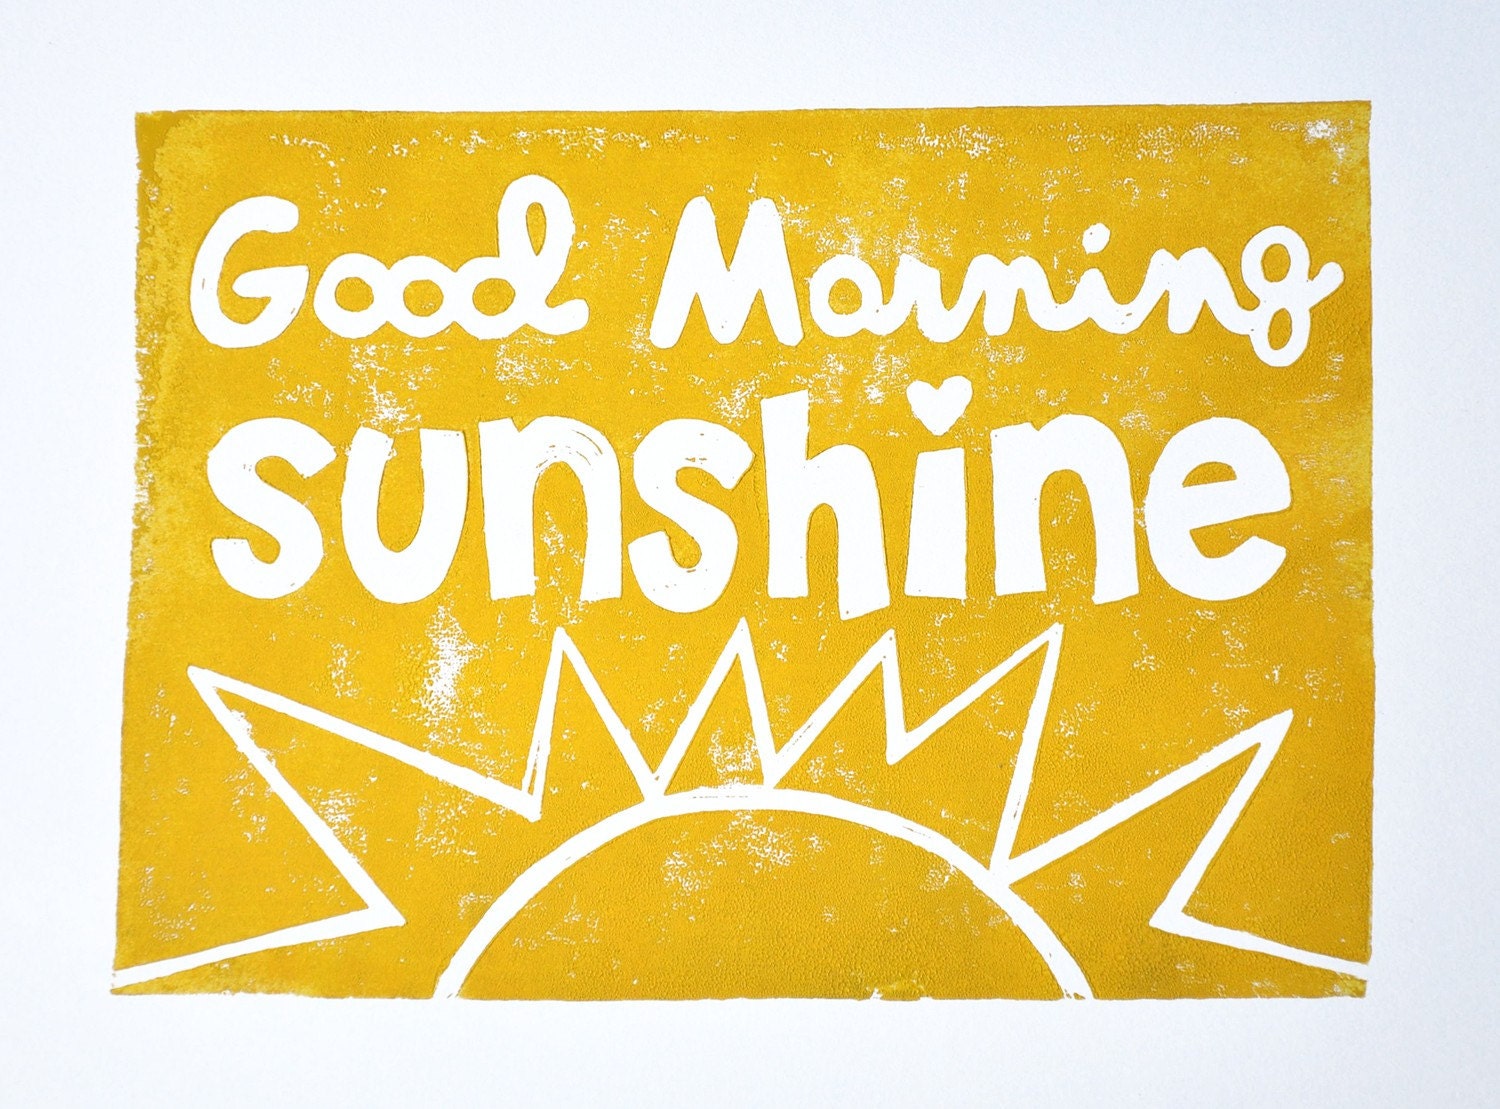 GOOD MORNING SUNSHINE - mustard yellow - original block print - 8x10 - PickledPineapple